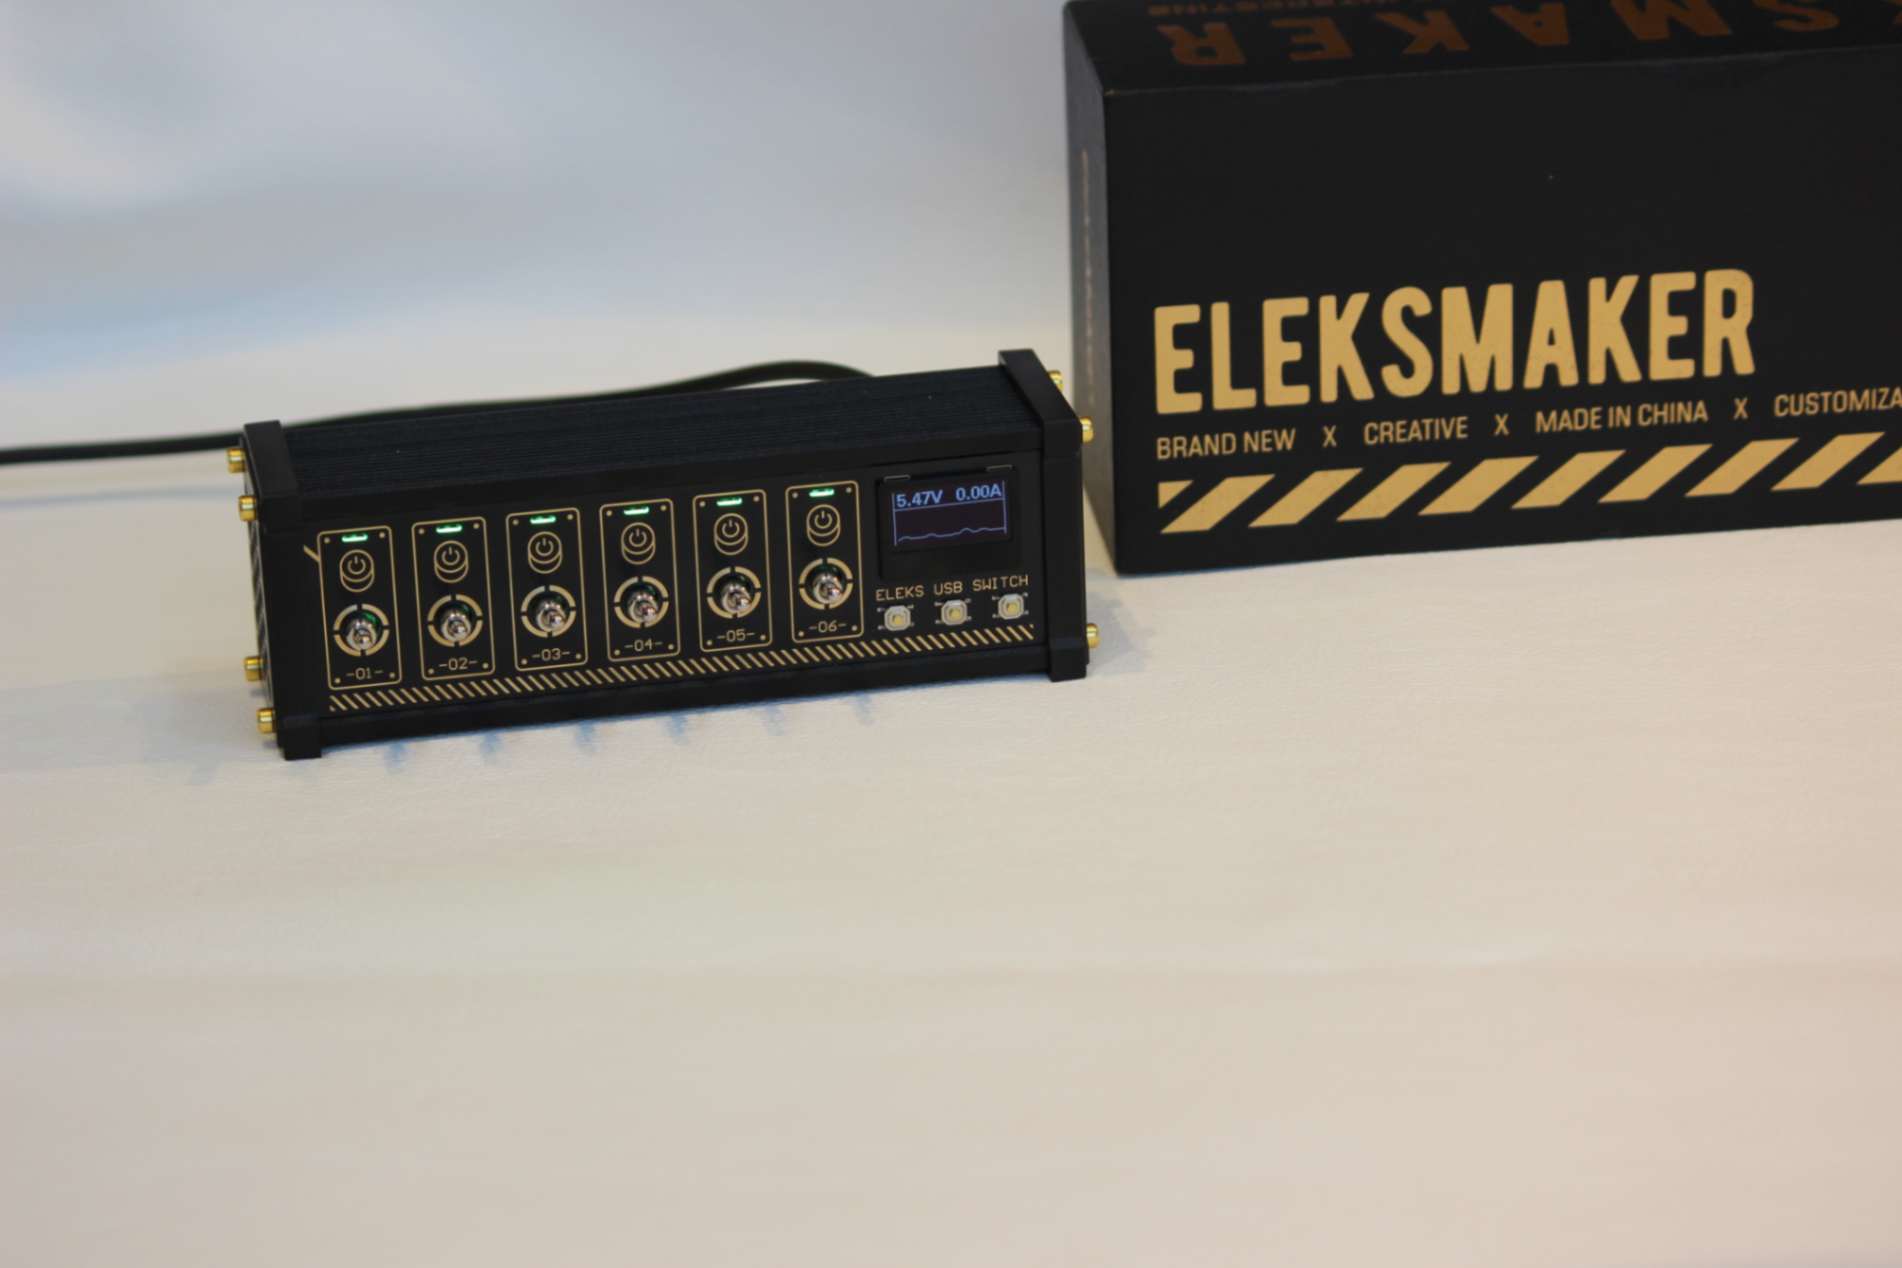 Specifications of Eleksmaker USB Switch Version 22.9
